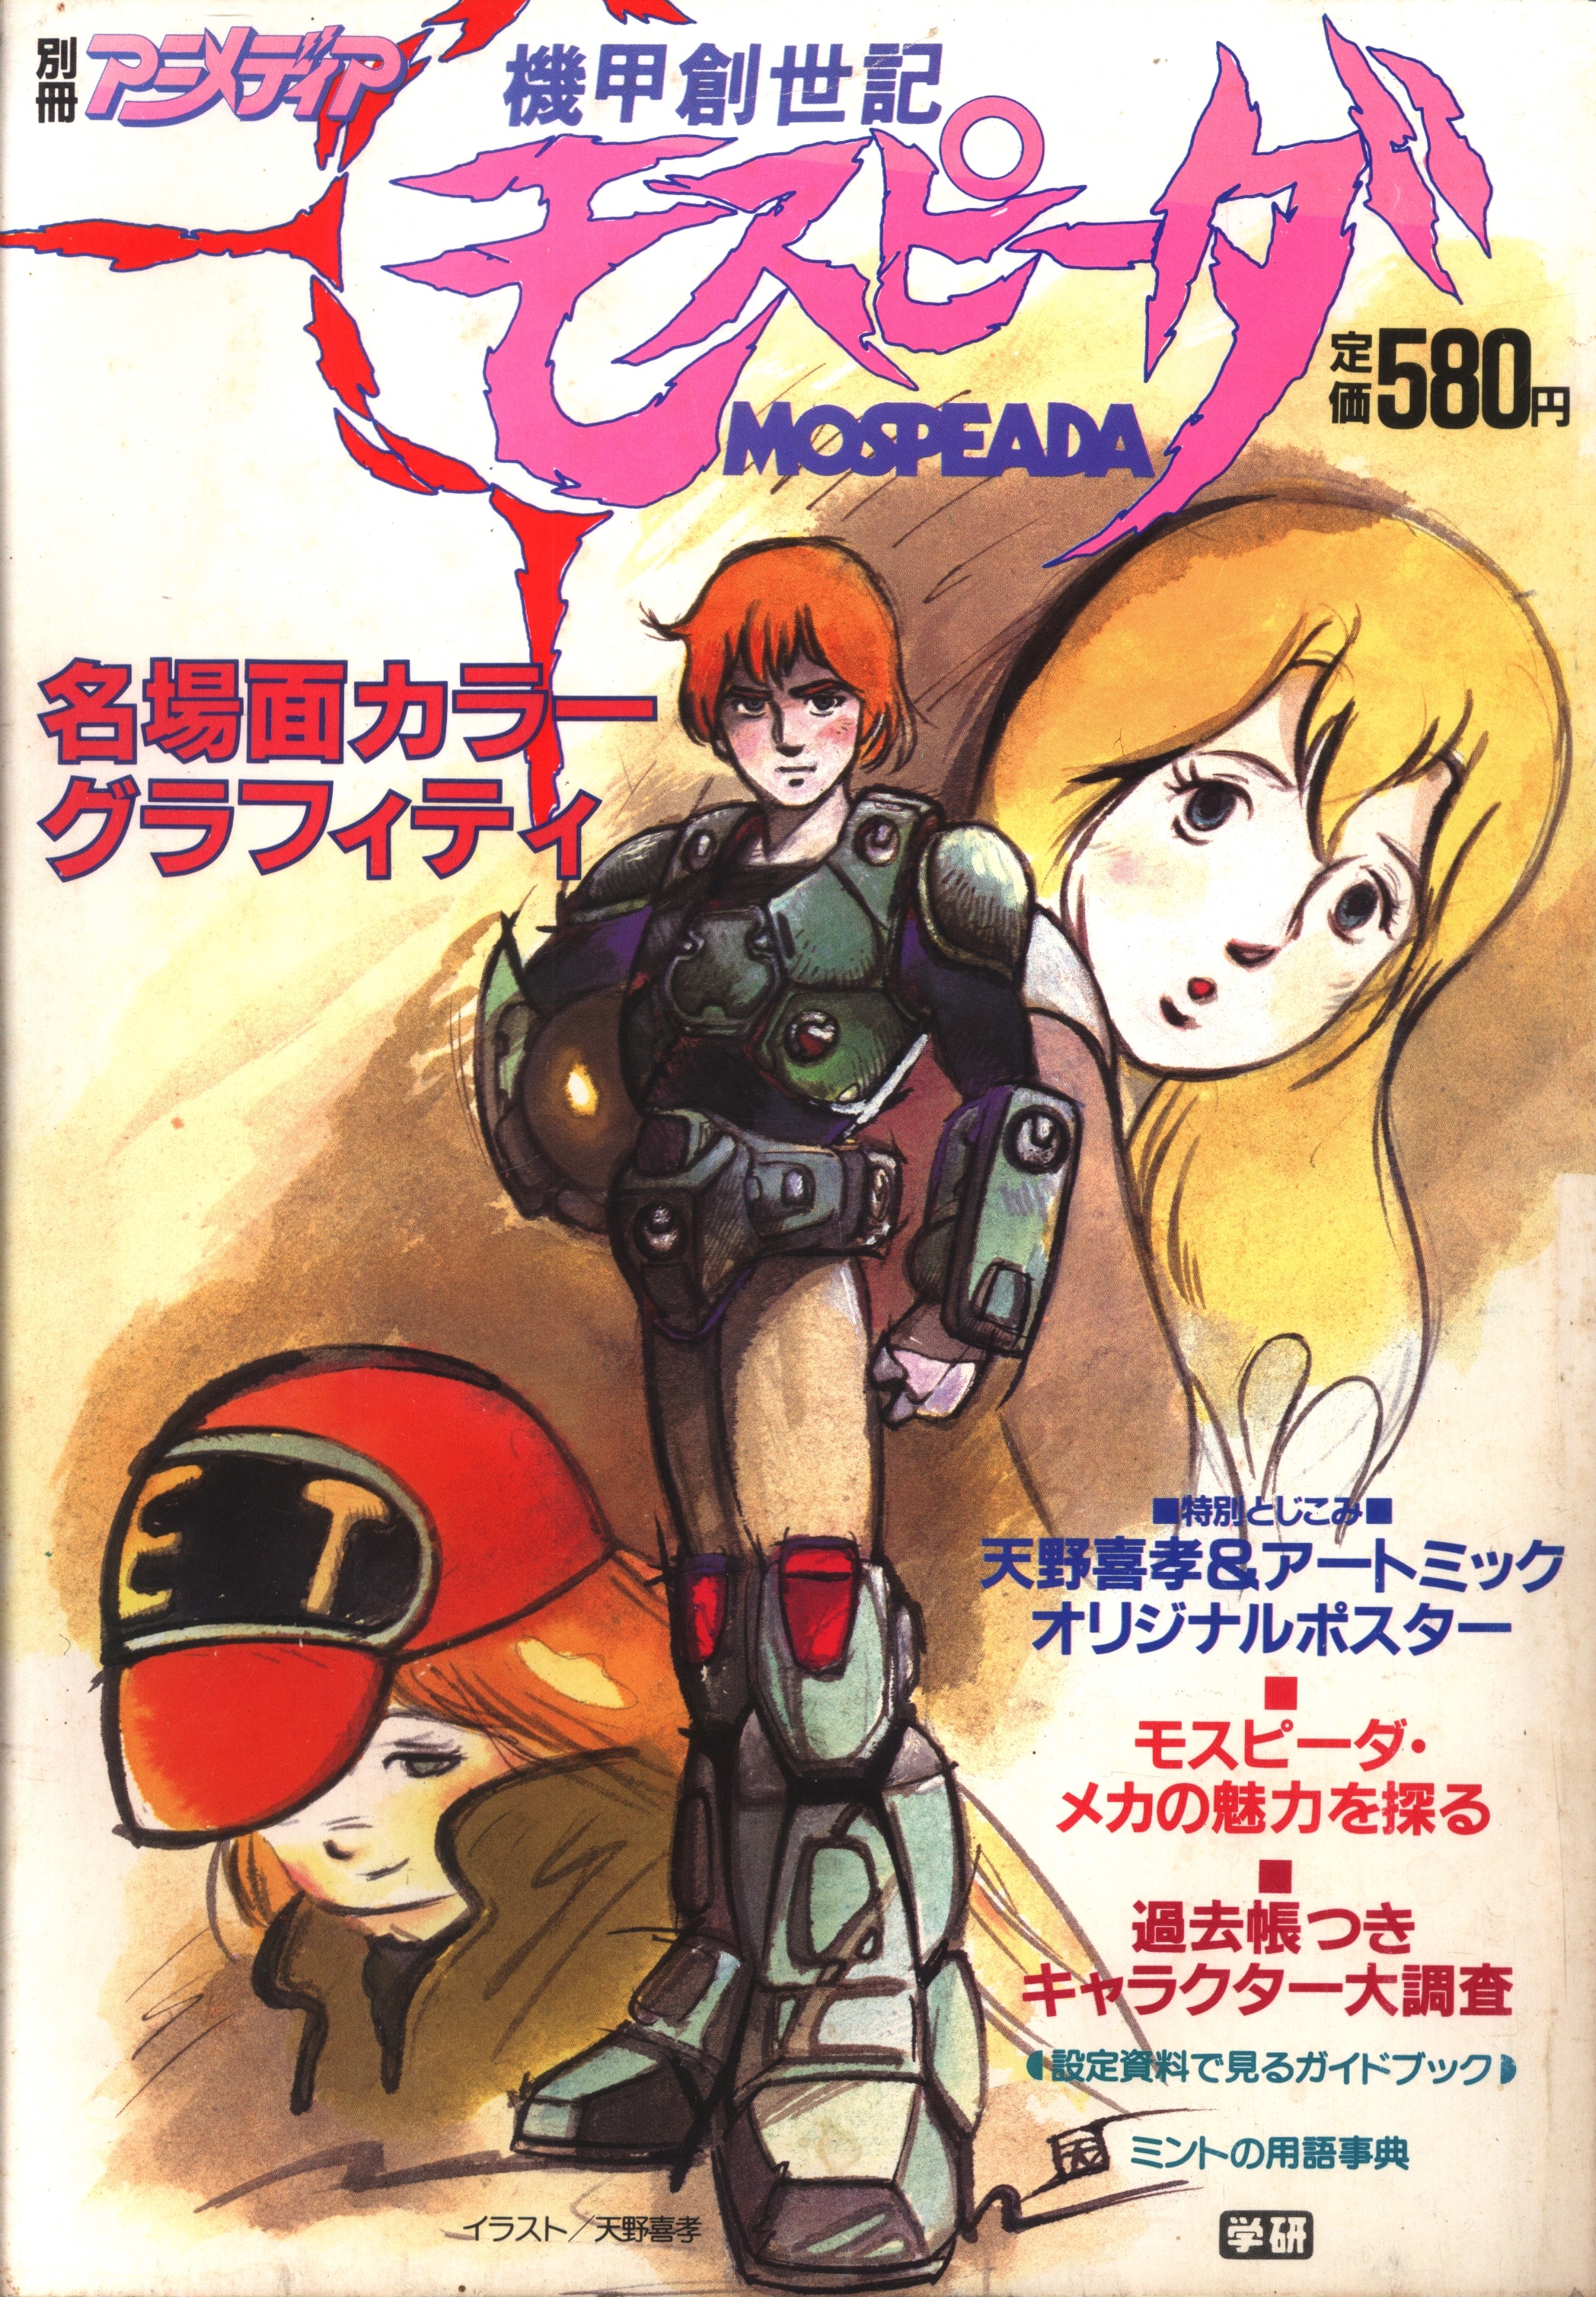 Genesis Climber MOSPEADA FILE Entertainment Archive Plastic model Book Japan